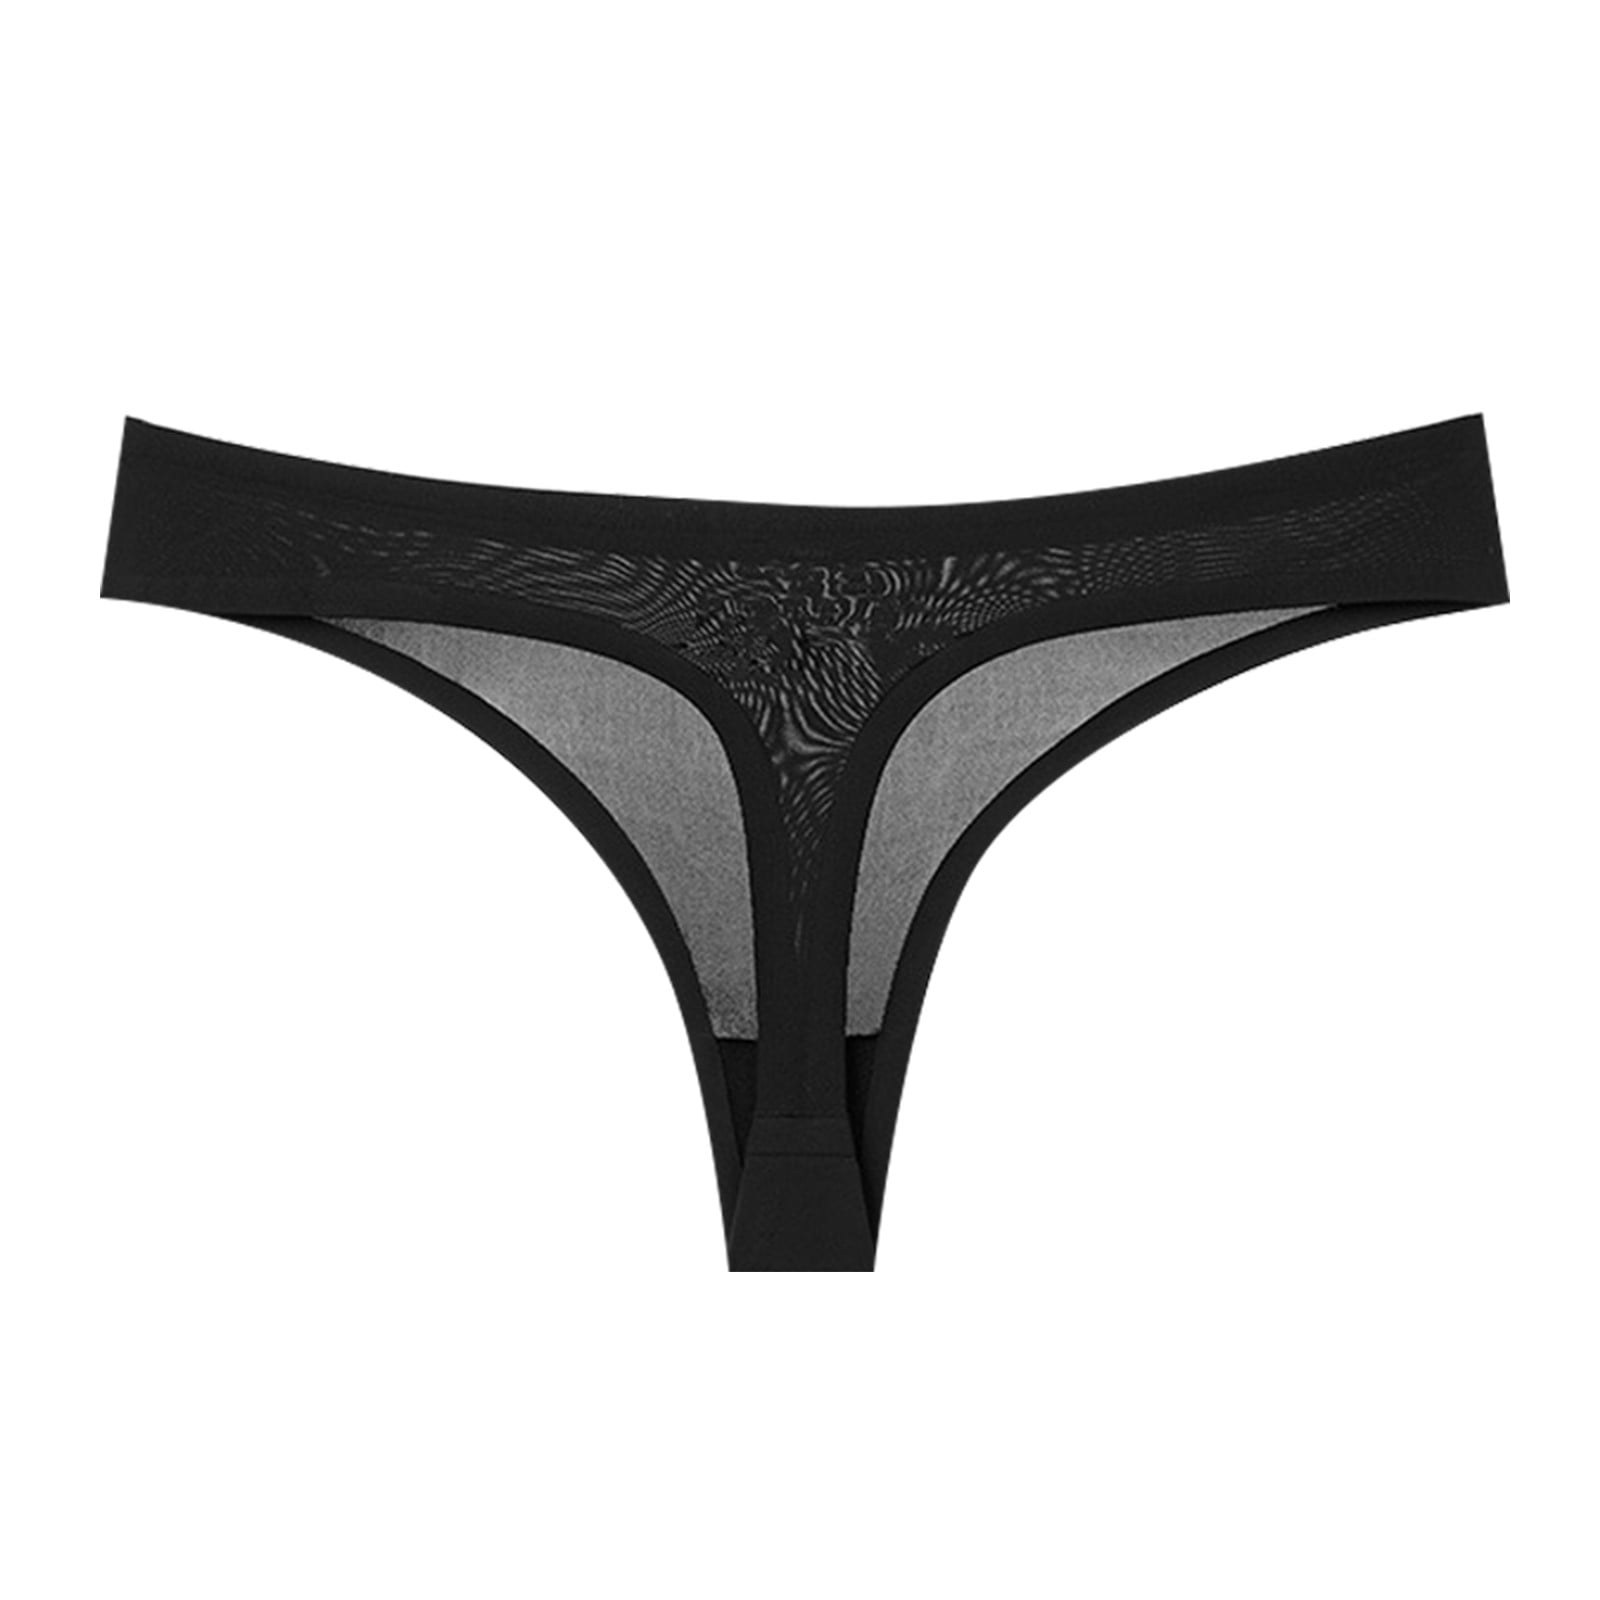 LBECLEY Ladies Panties Size 9 Womens Underwear Cotton Bikini